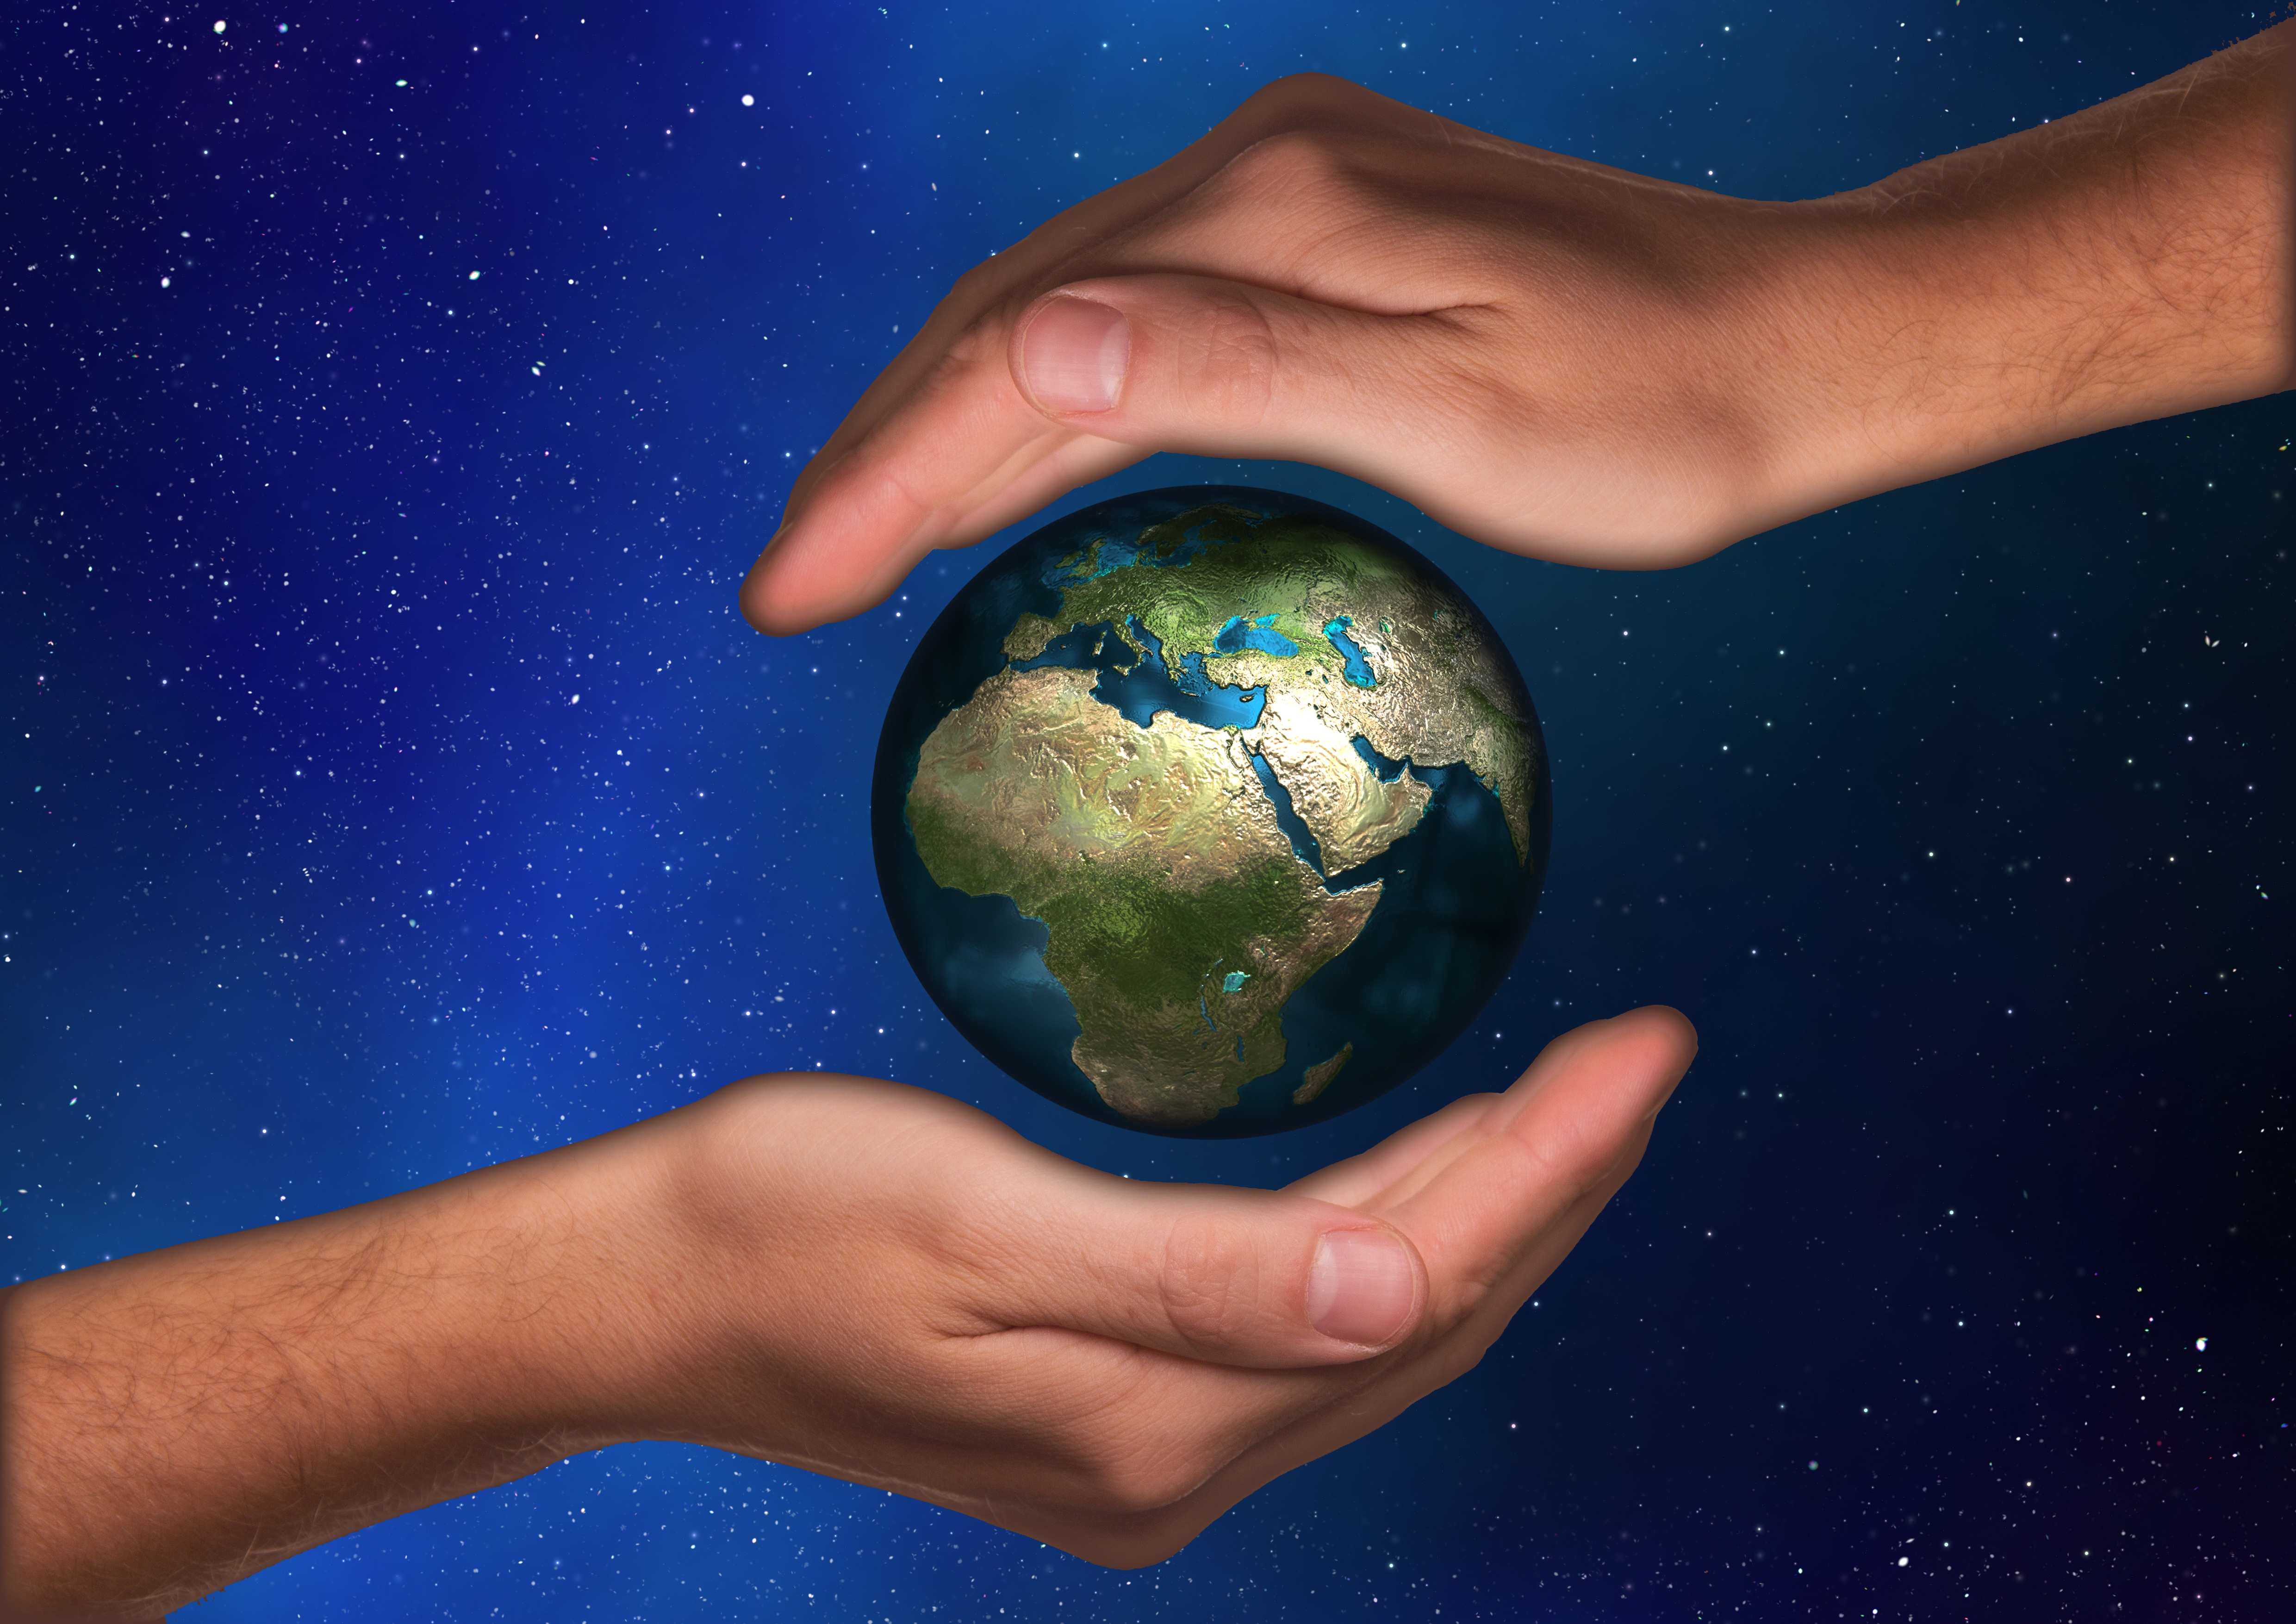 Сценарий планета земля. Планета в руках человека. Планета земля в руках. Земной шар в руках. Планета земля в руках человека.